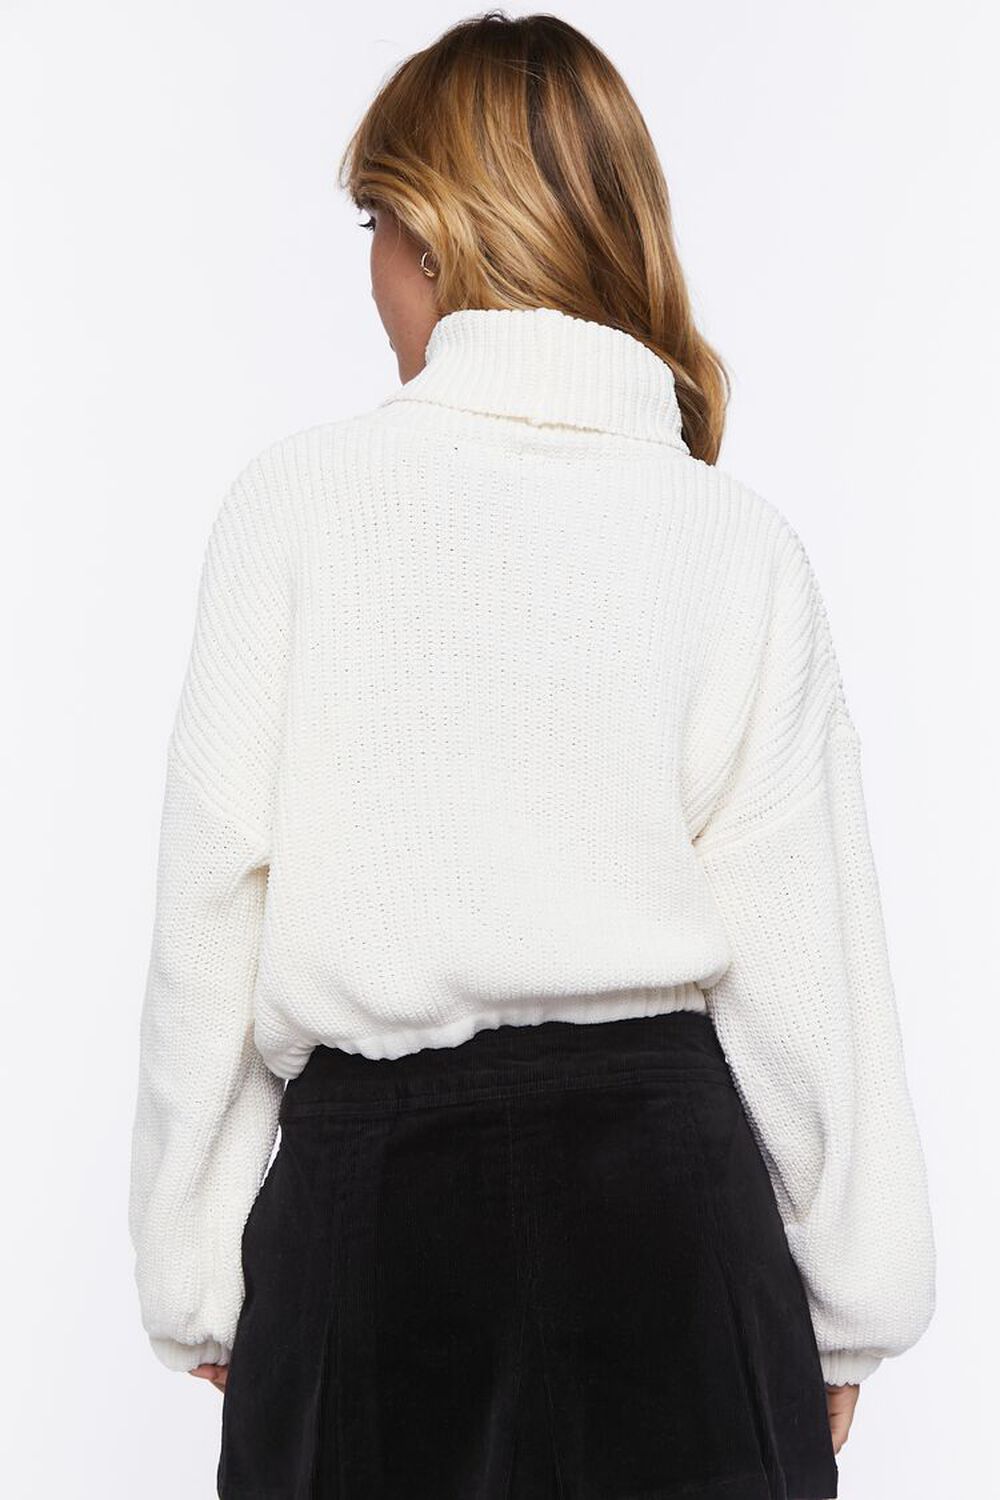 VANILLA Ribbed Turtleneck Sweater, image 3